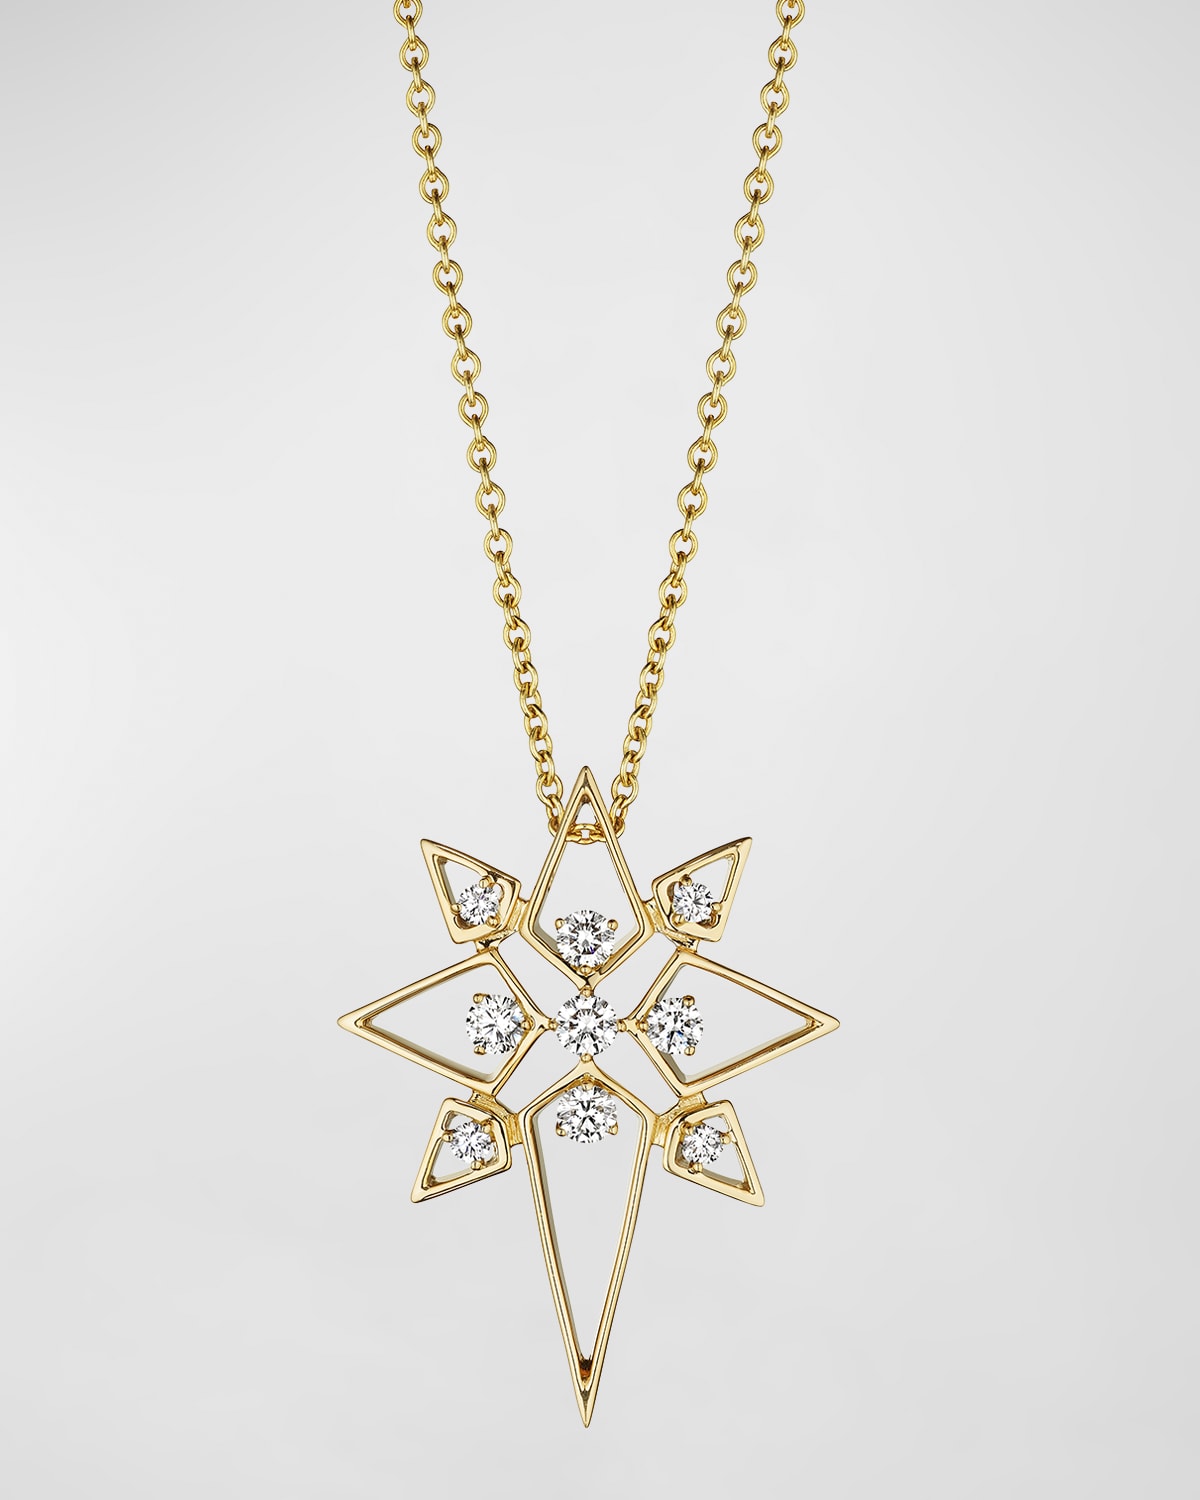 18K Estelar Yellow Gold Pendant Necklace with Diamonds, 18"L